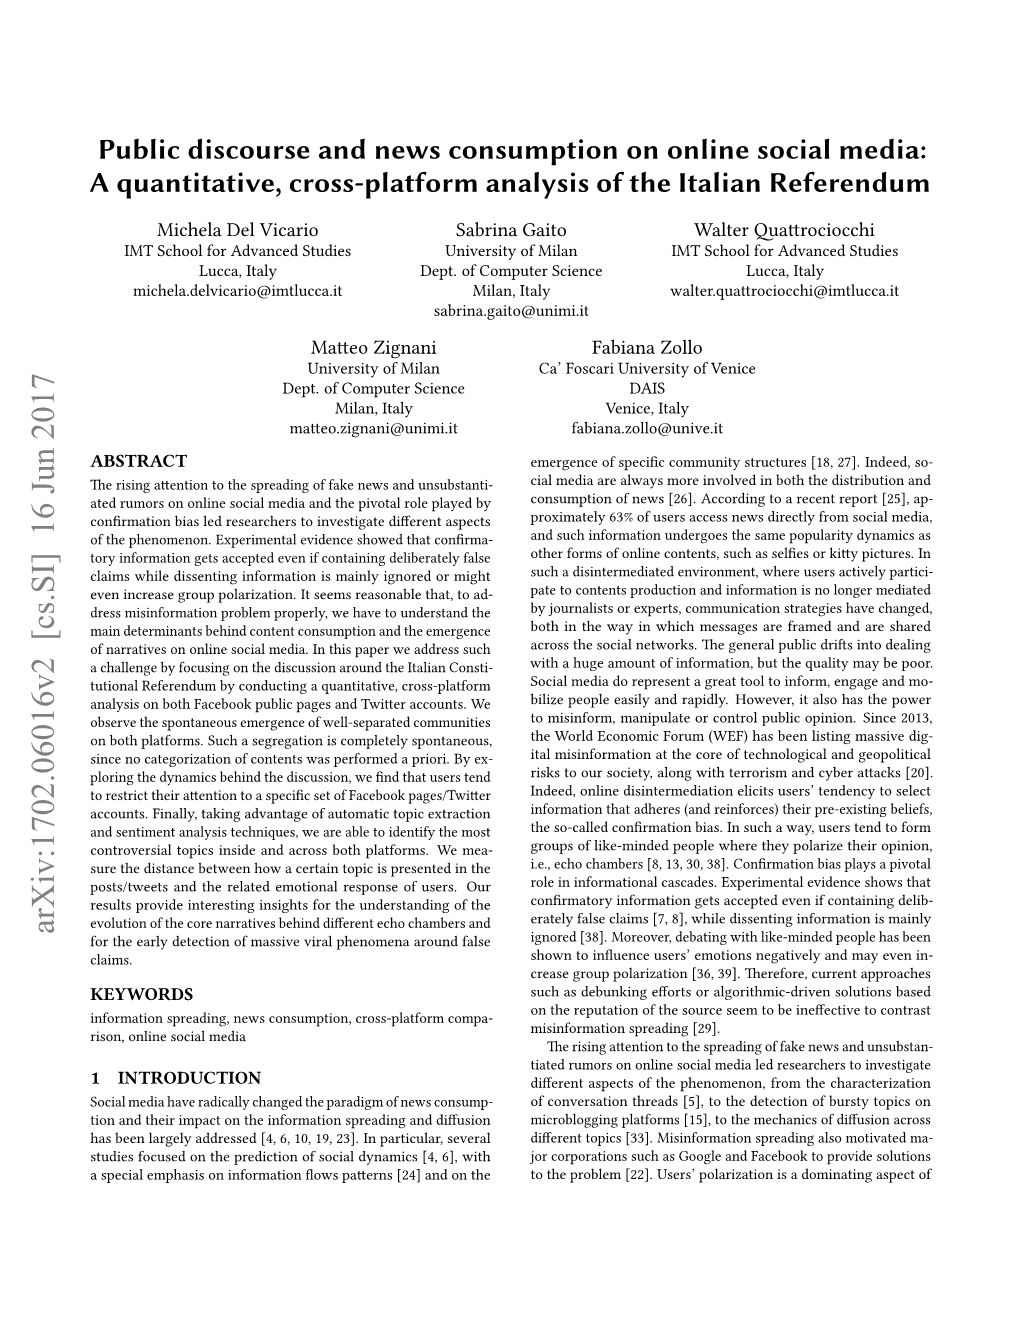 Public Discourse and News Consumption on Online Social Media: a Quantitative, Cross-Platform Analysis of the Italian Referendum